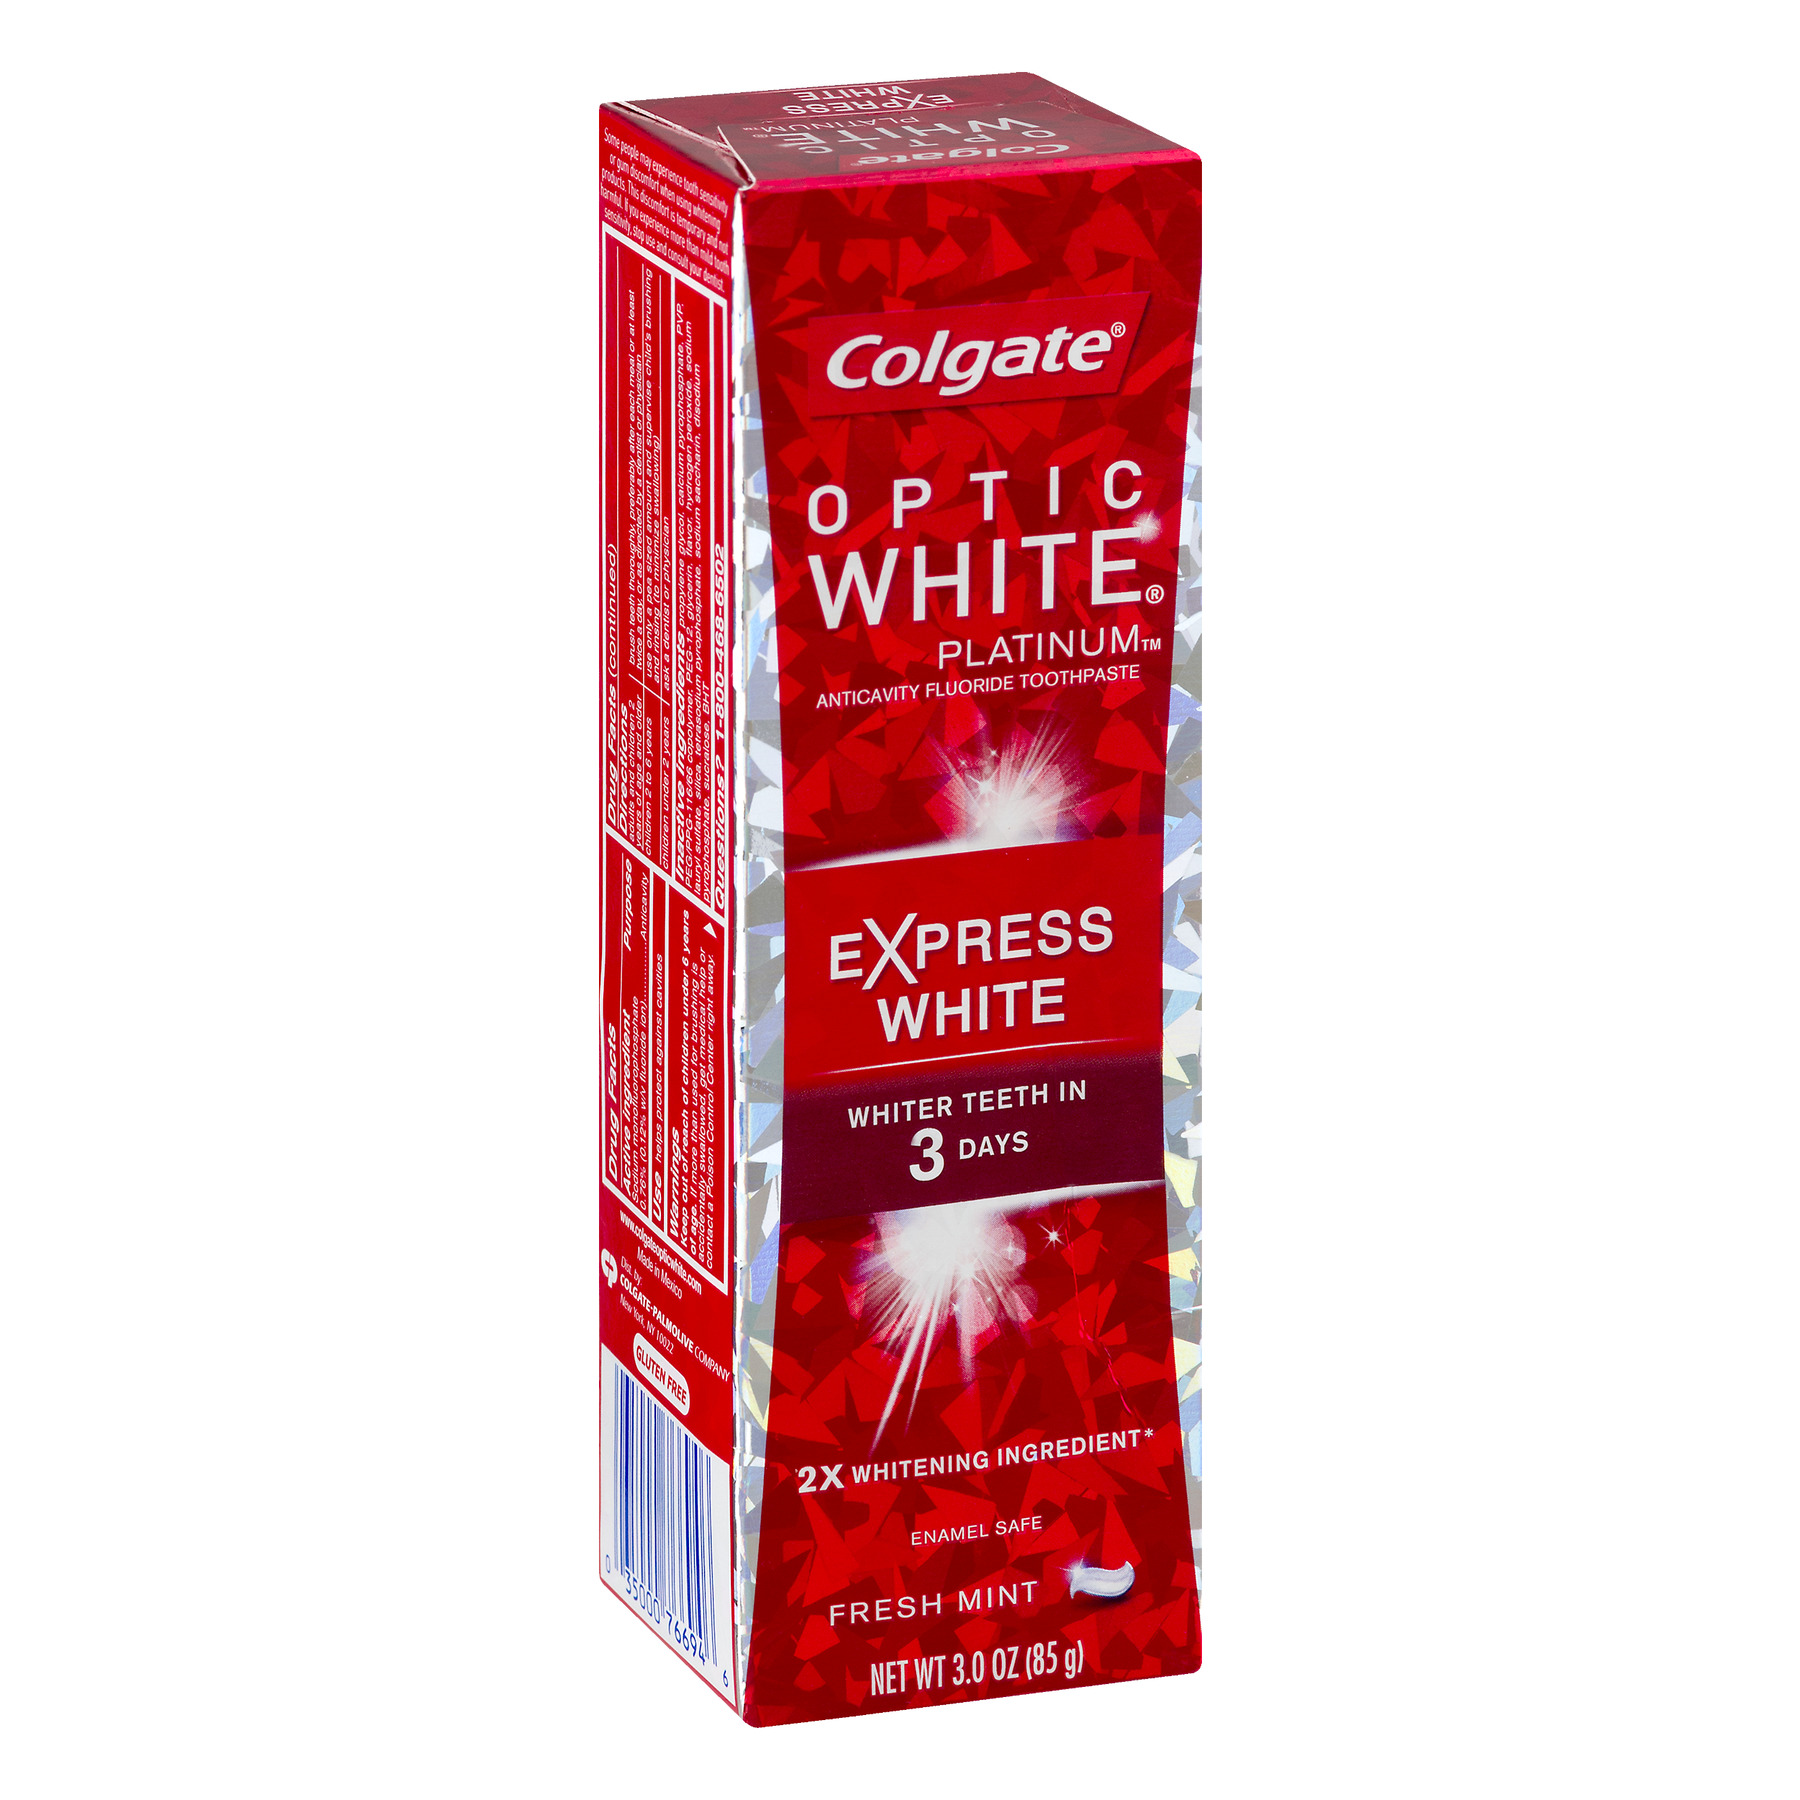 Colgate Optic White Express White Whitening Toothpaste - 3 ounce - image 2 of 8